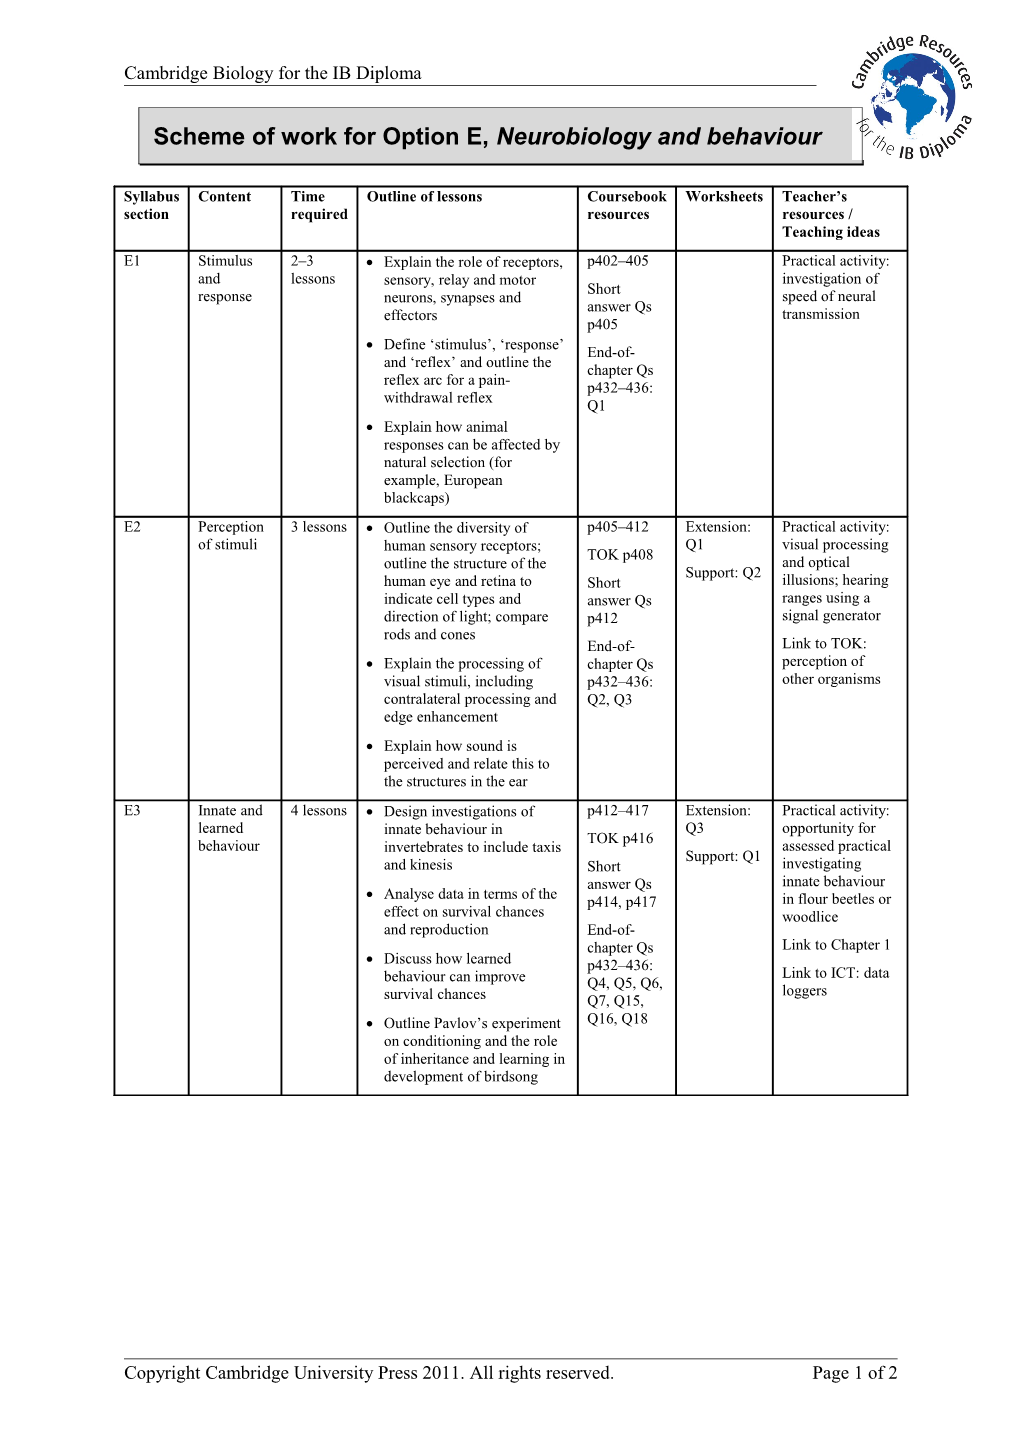 Scheme of Work for Option E